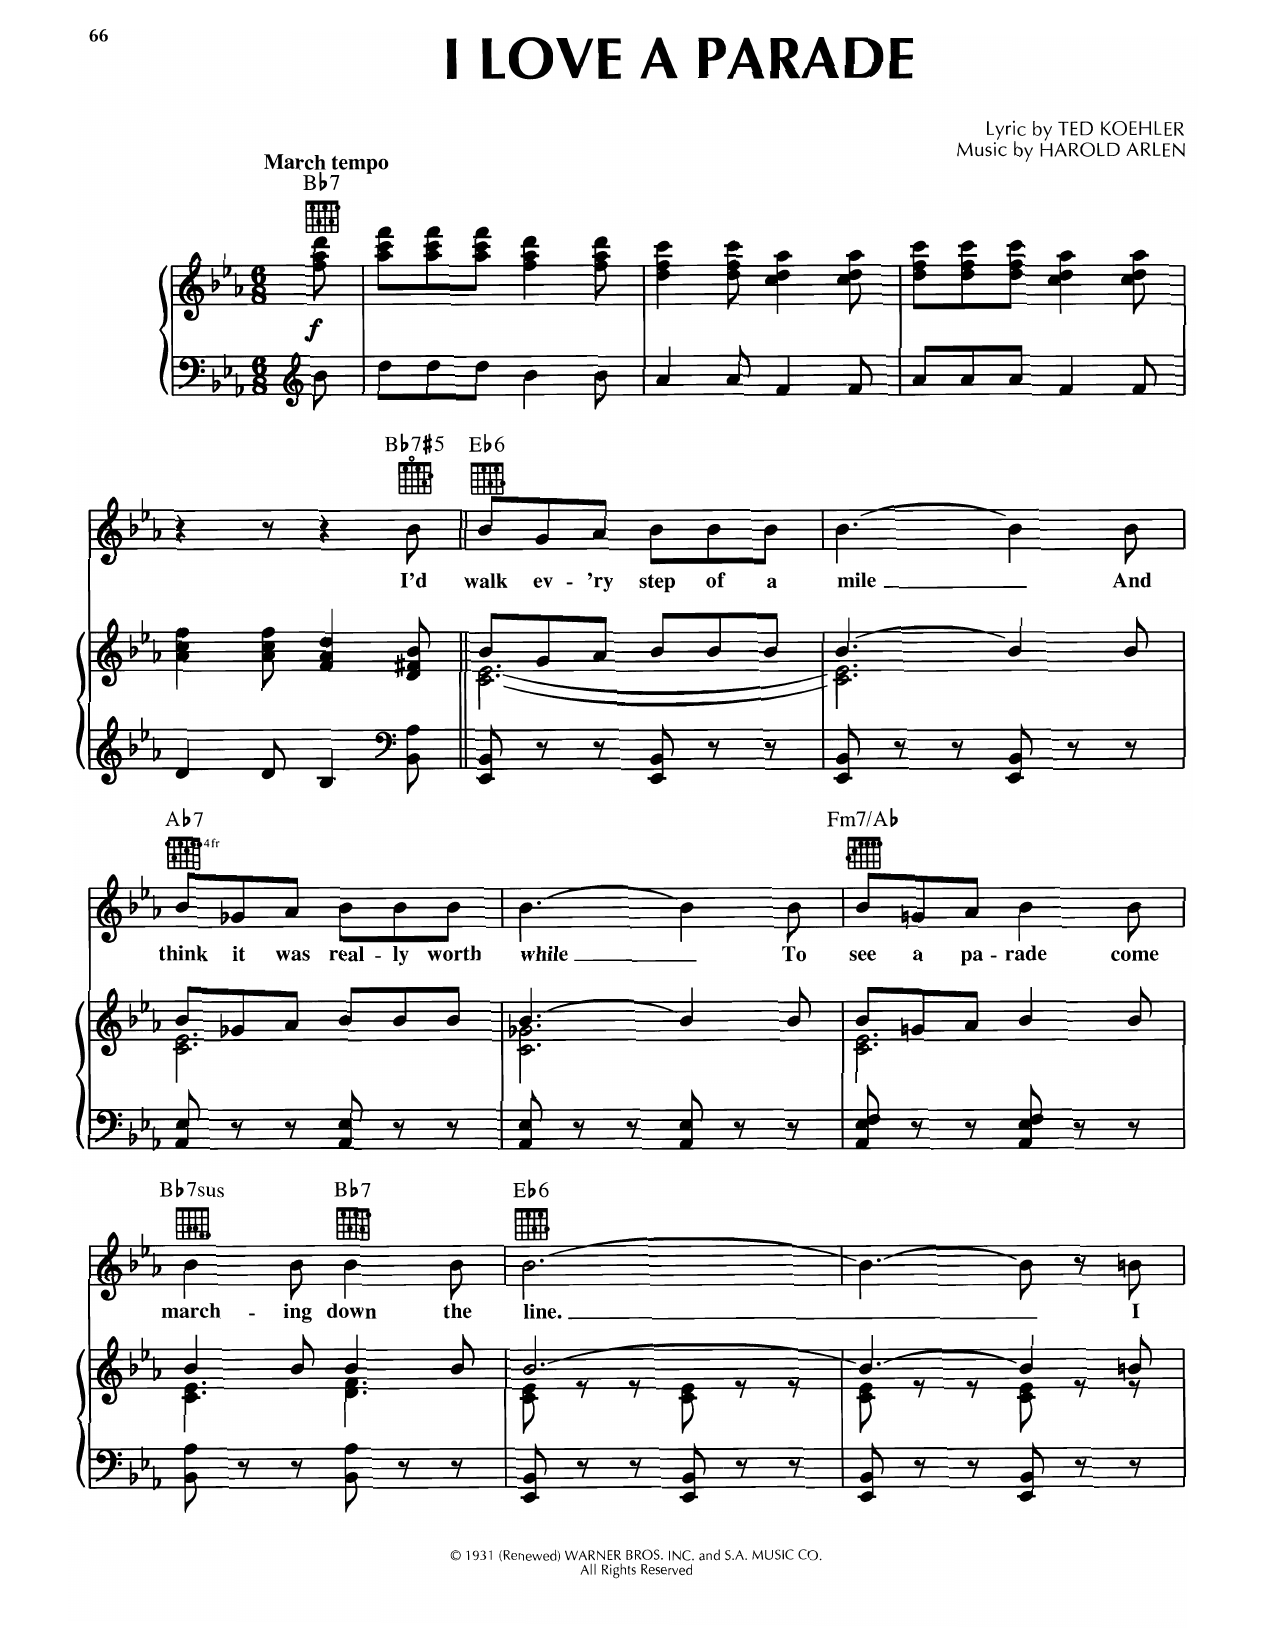 Harold Arlen I Love A Parade Sheet Music Notes & Chords for Piano, Vocal & Guitar Chords (Right-Hand Melody) - Download or Print PDF